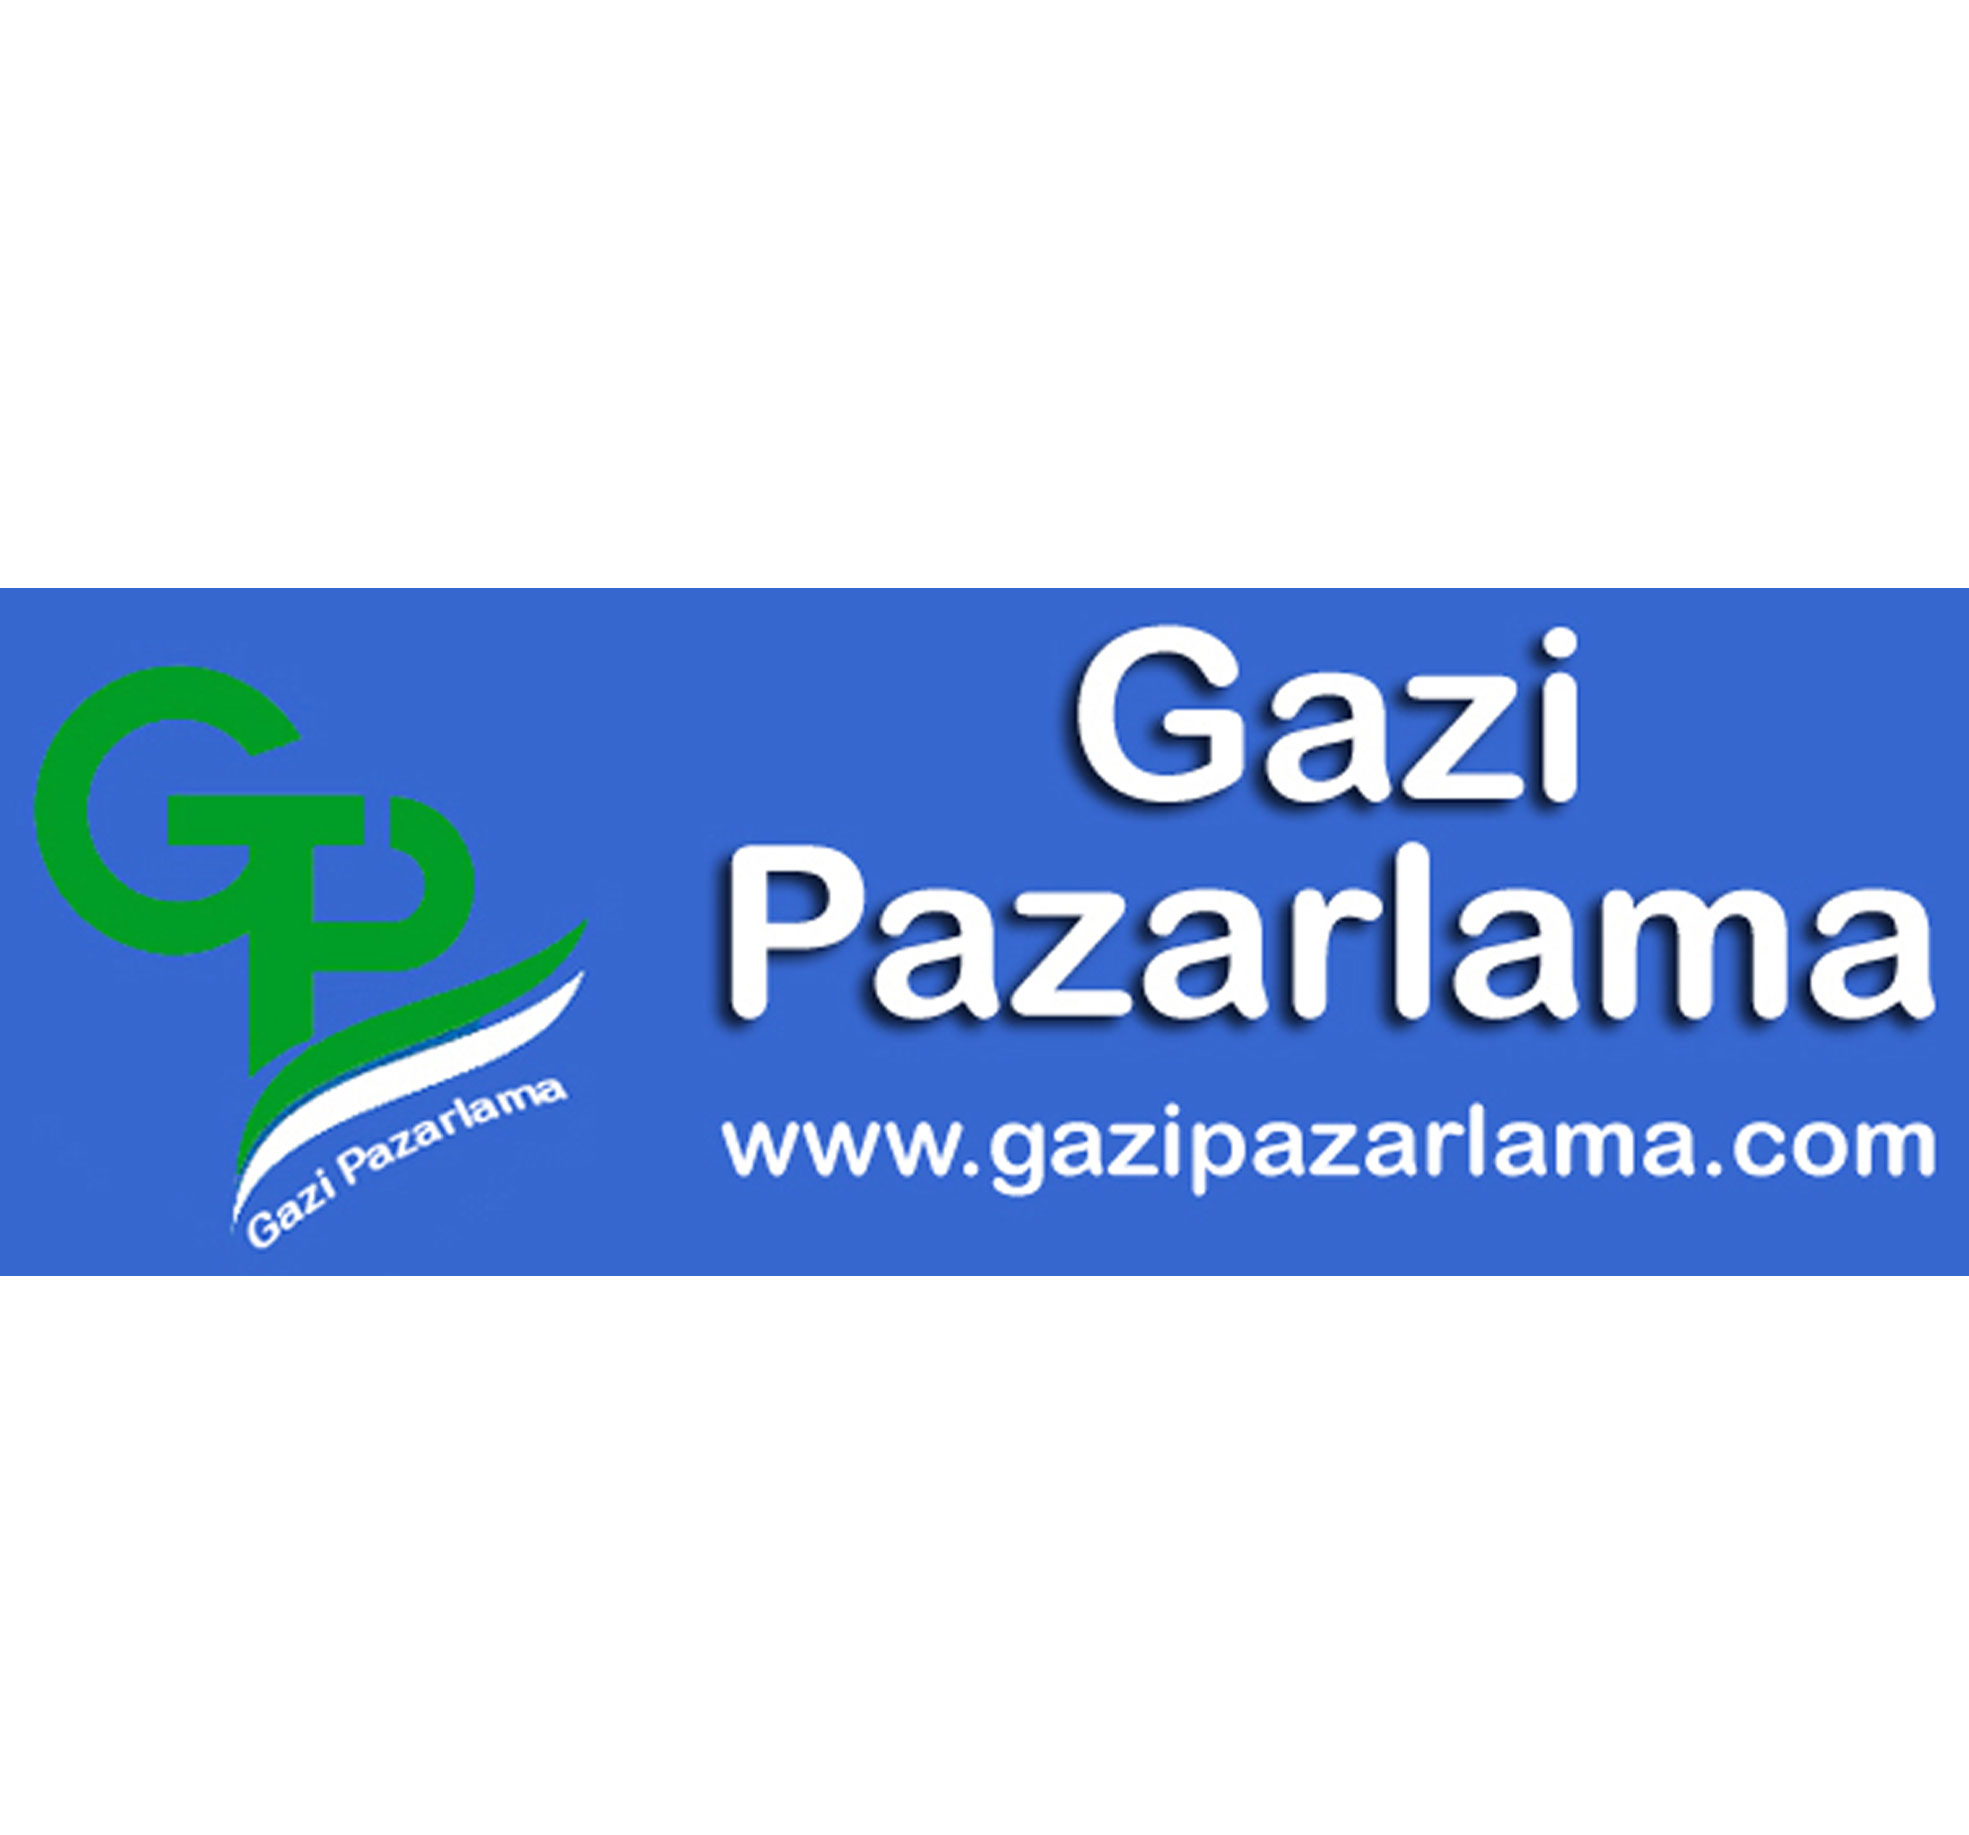 Gazi Pazarlama - Kara tarla mahallesi, Karagöz CD. No:17 D:E, 27710 Şahinbey / Gaziantep Özel Baklavalar